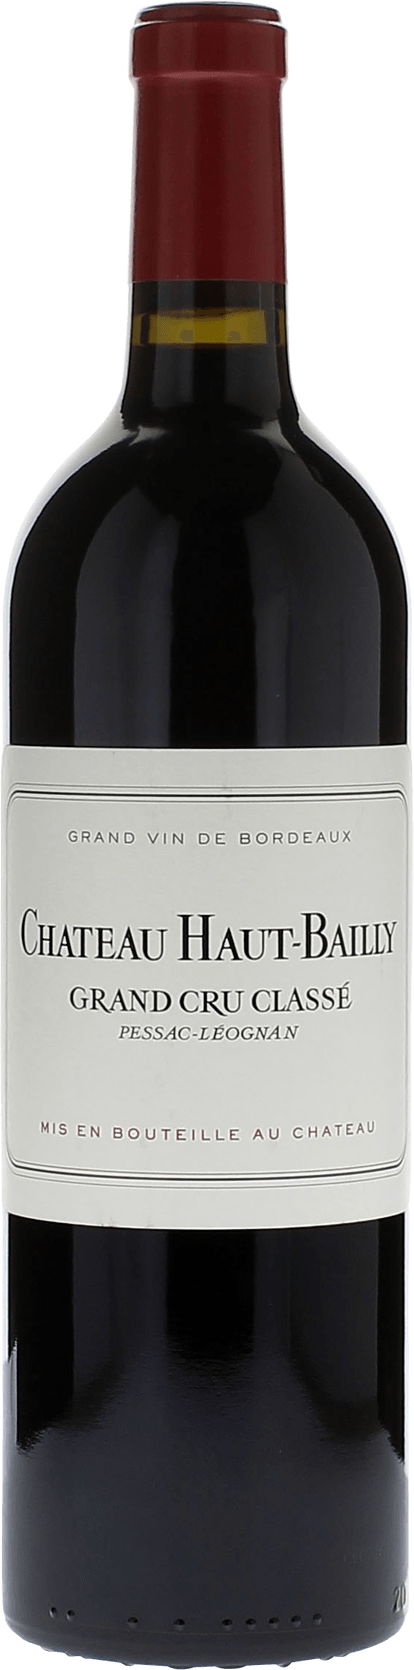 Haut bailly 1988 cru class Pessac-Lognan, Bordeaux rouge